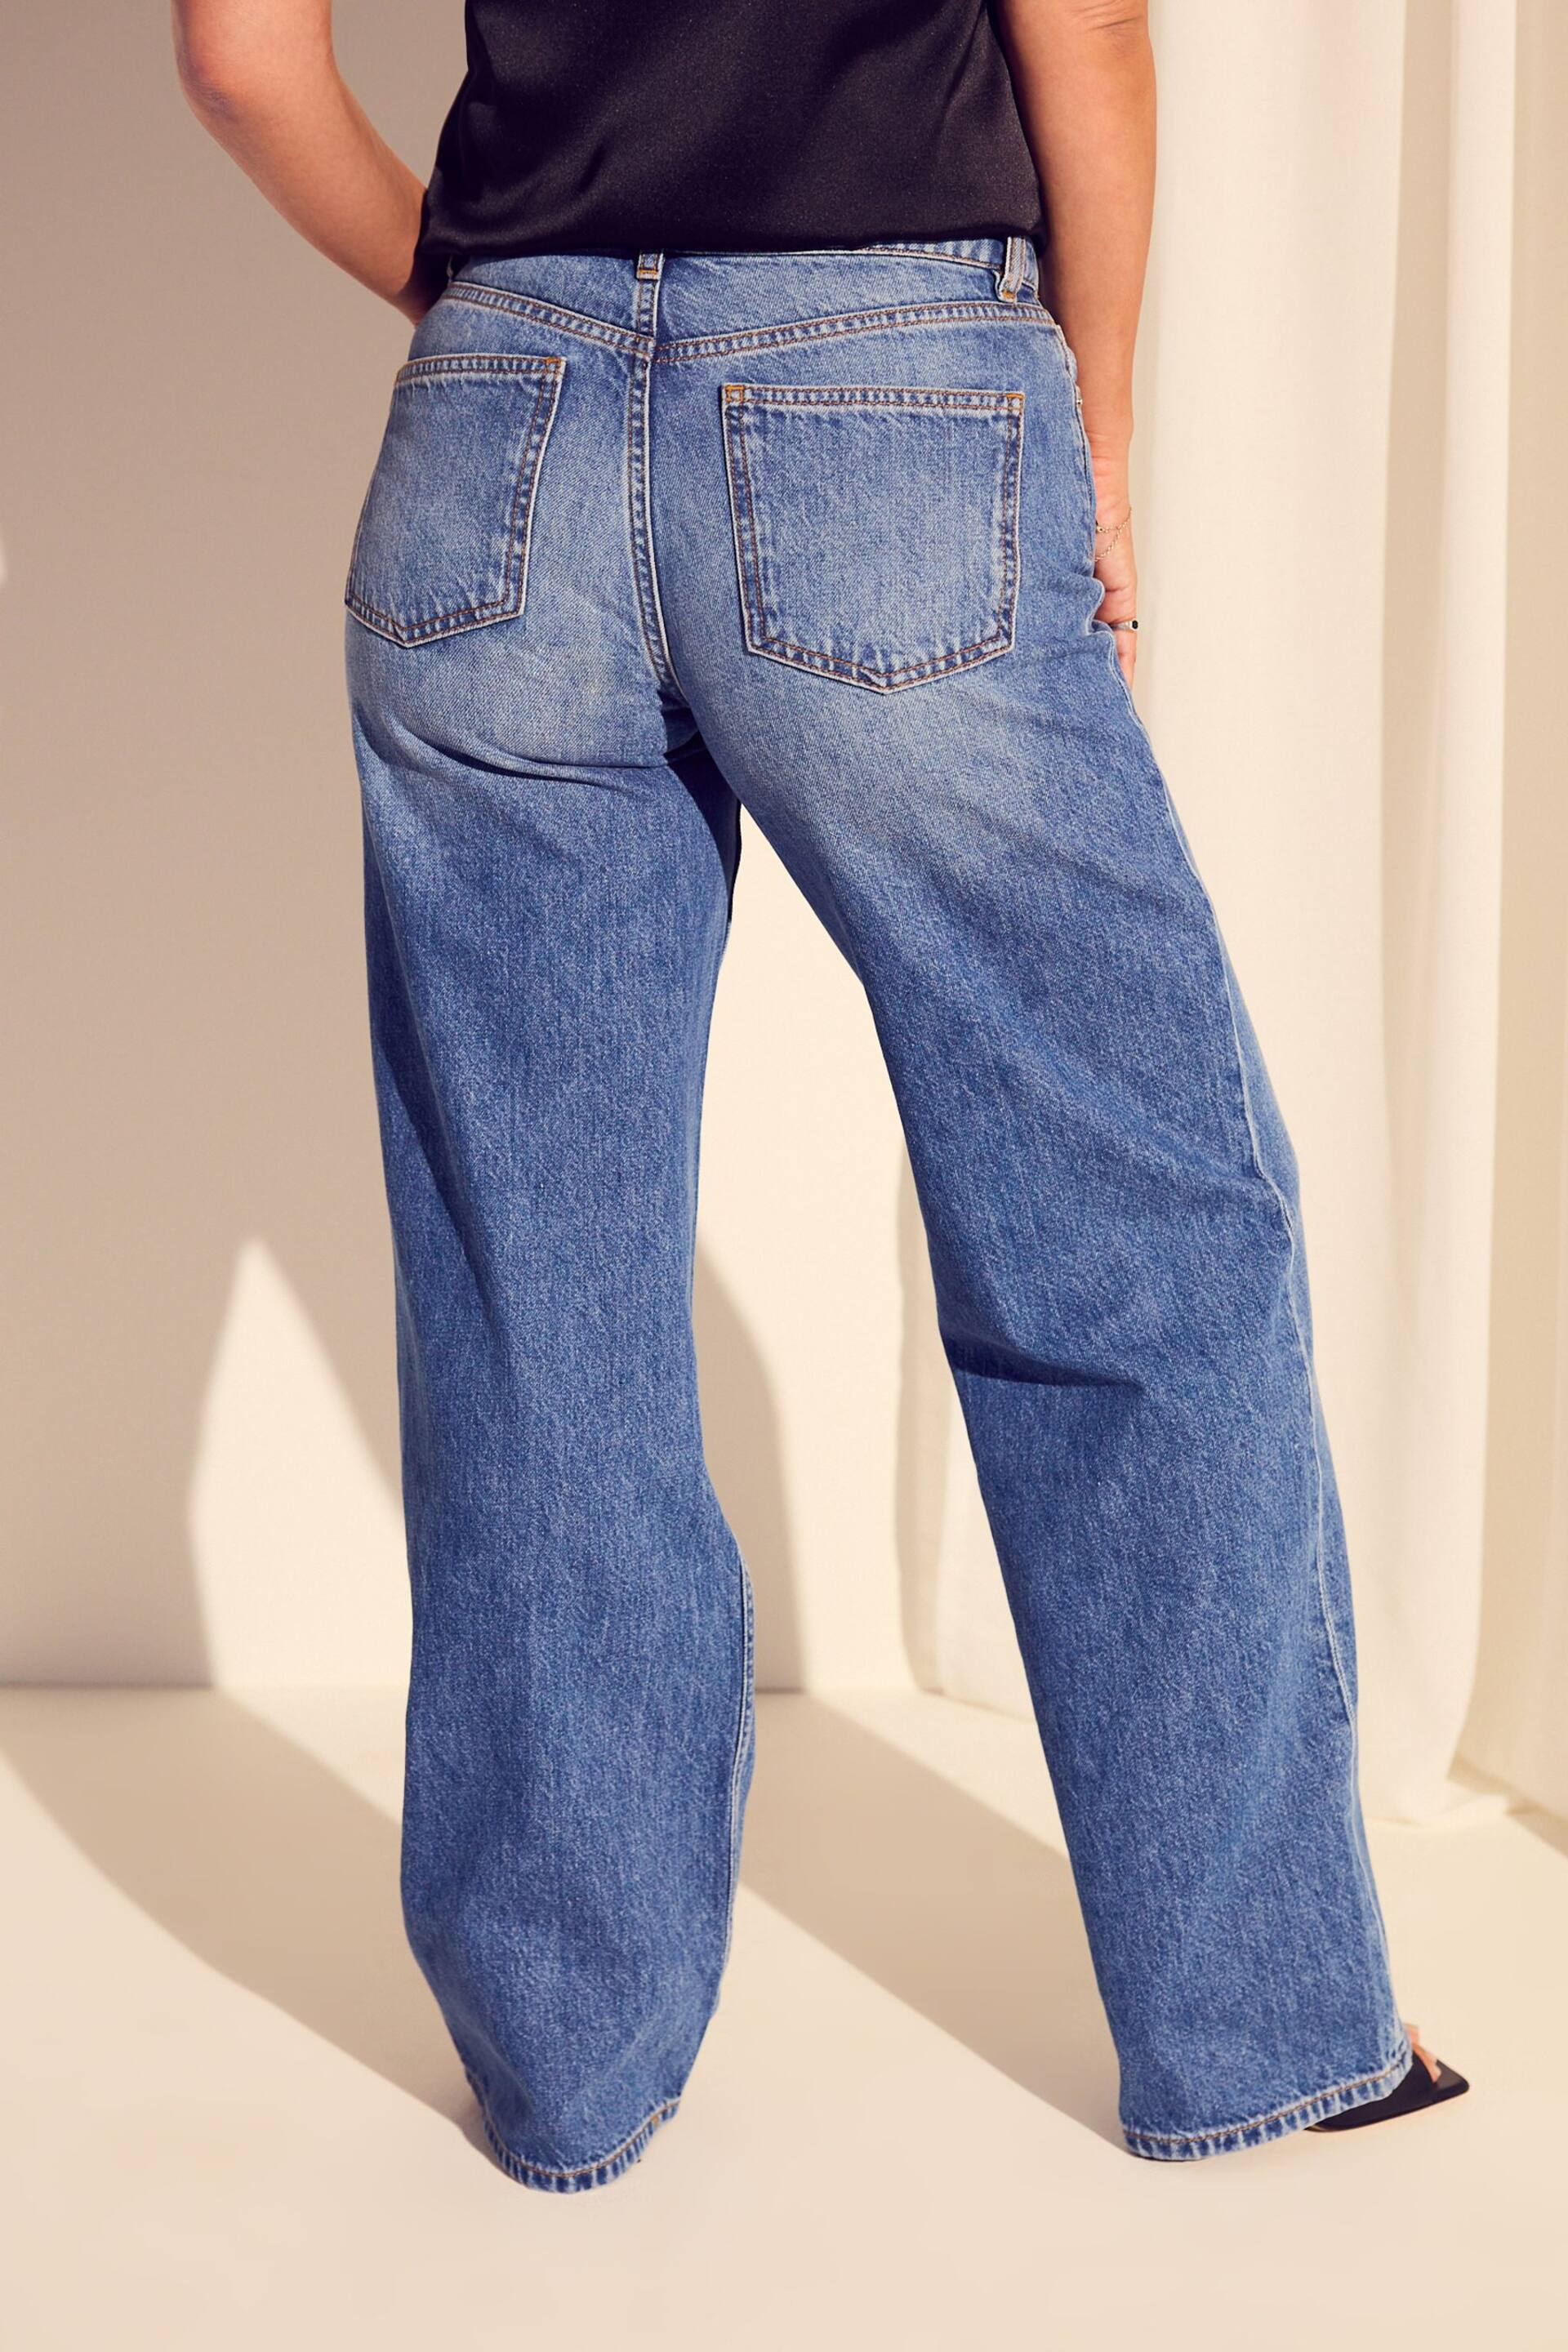 Myleene Klass Blue Denim Wide Leg Jeans - Image 4 of 7